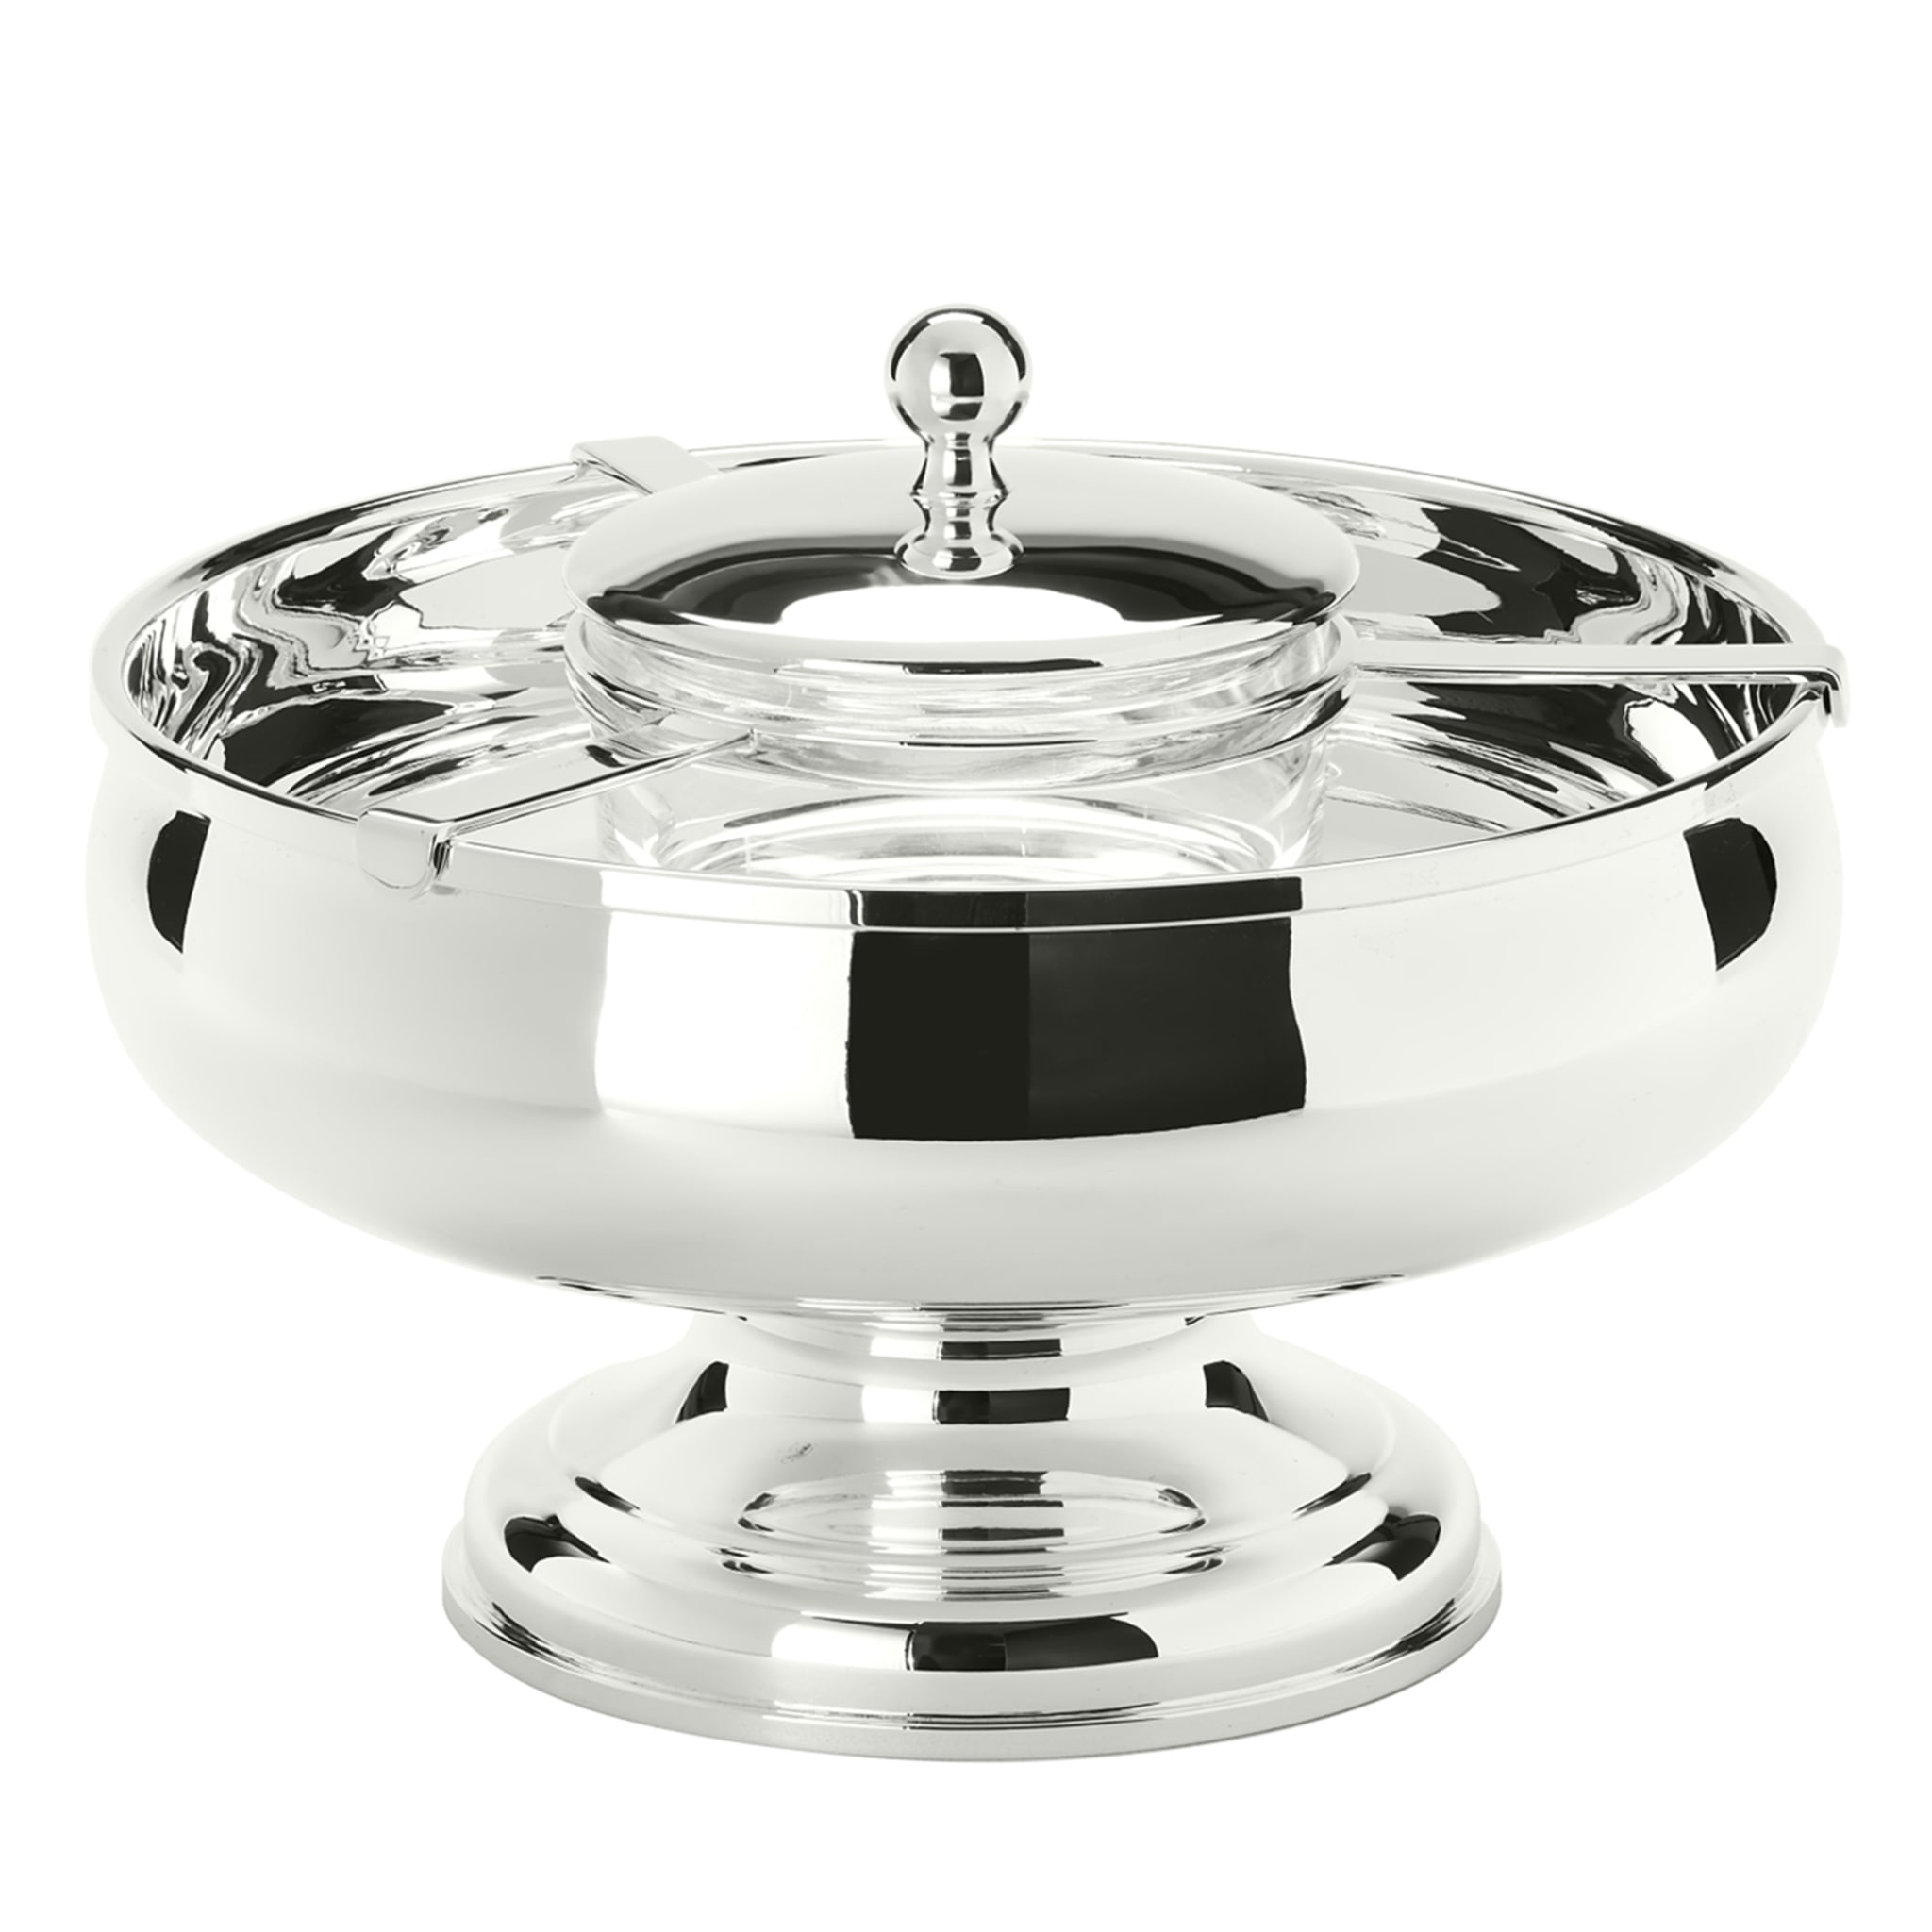 Essentia Caviar Bowl with Stand - Main view